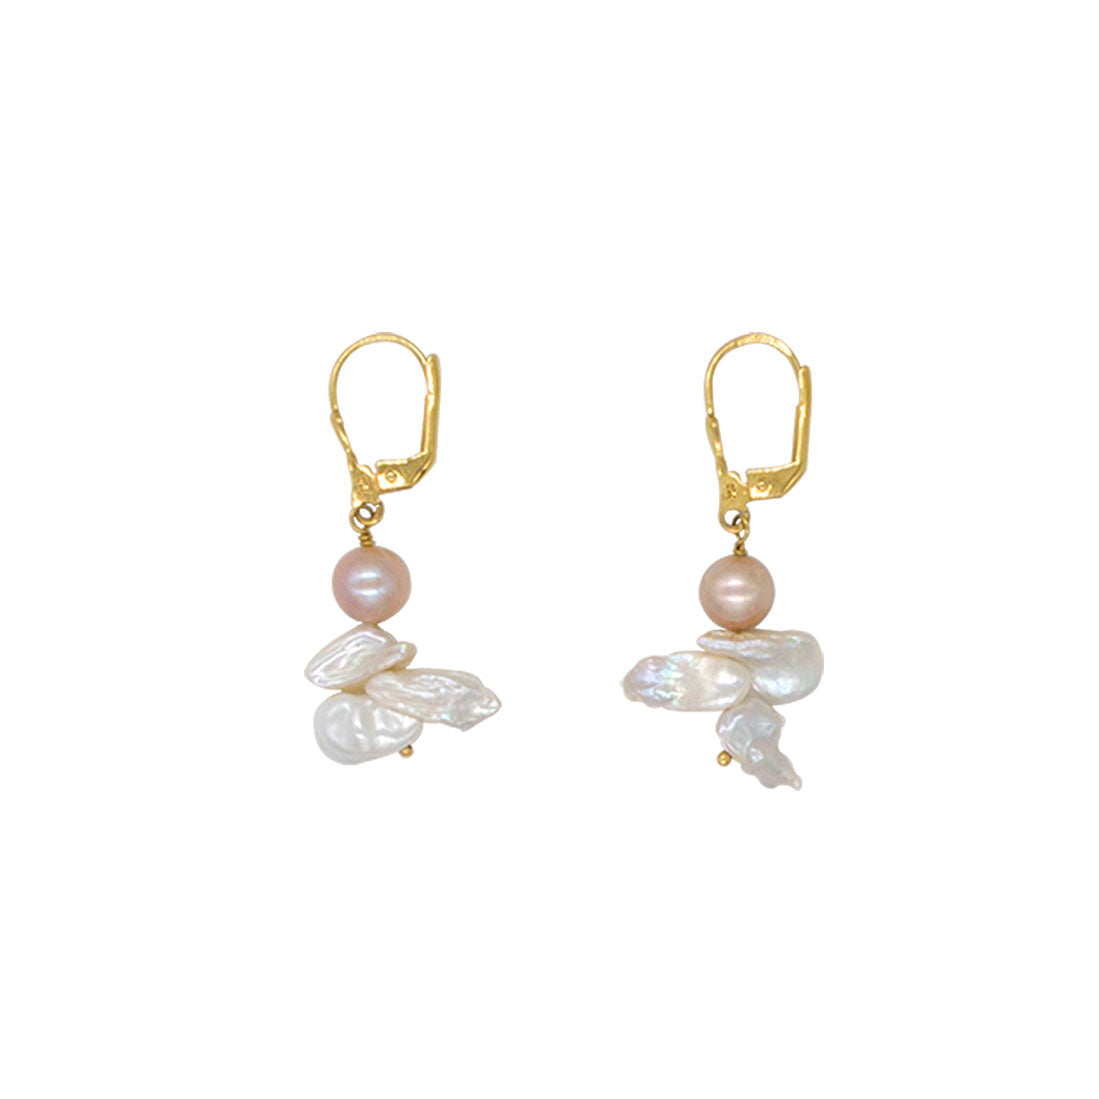 The Goa pearls delights Earrings